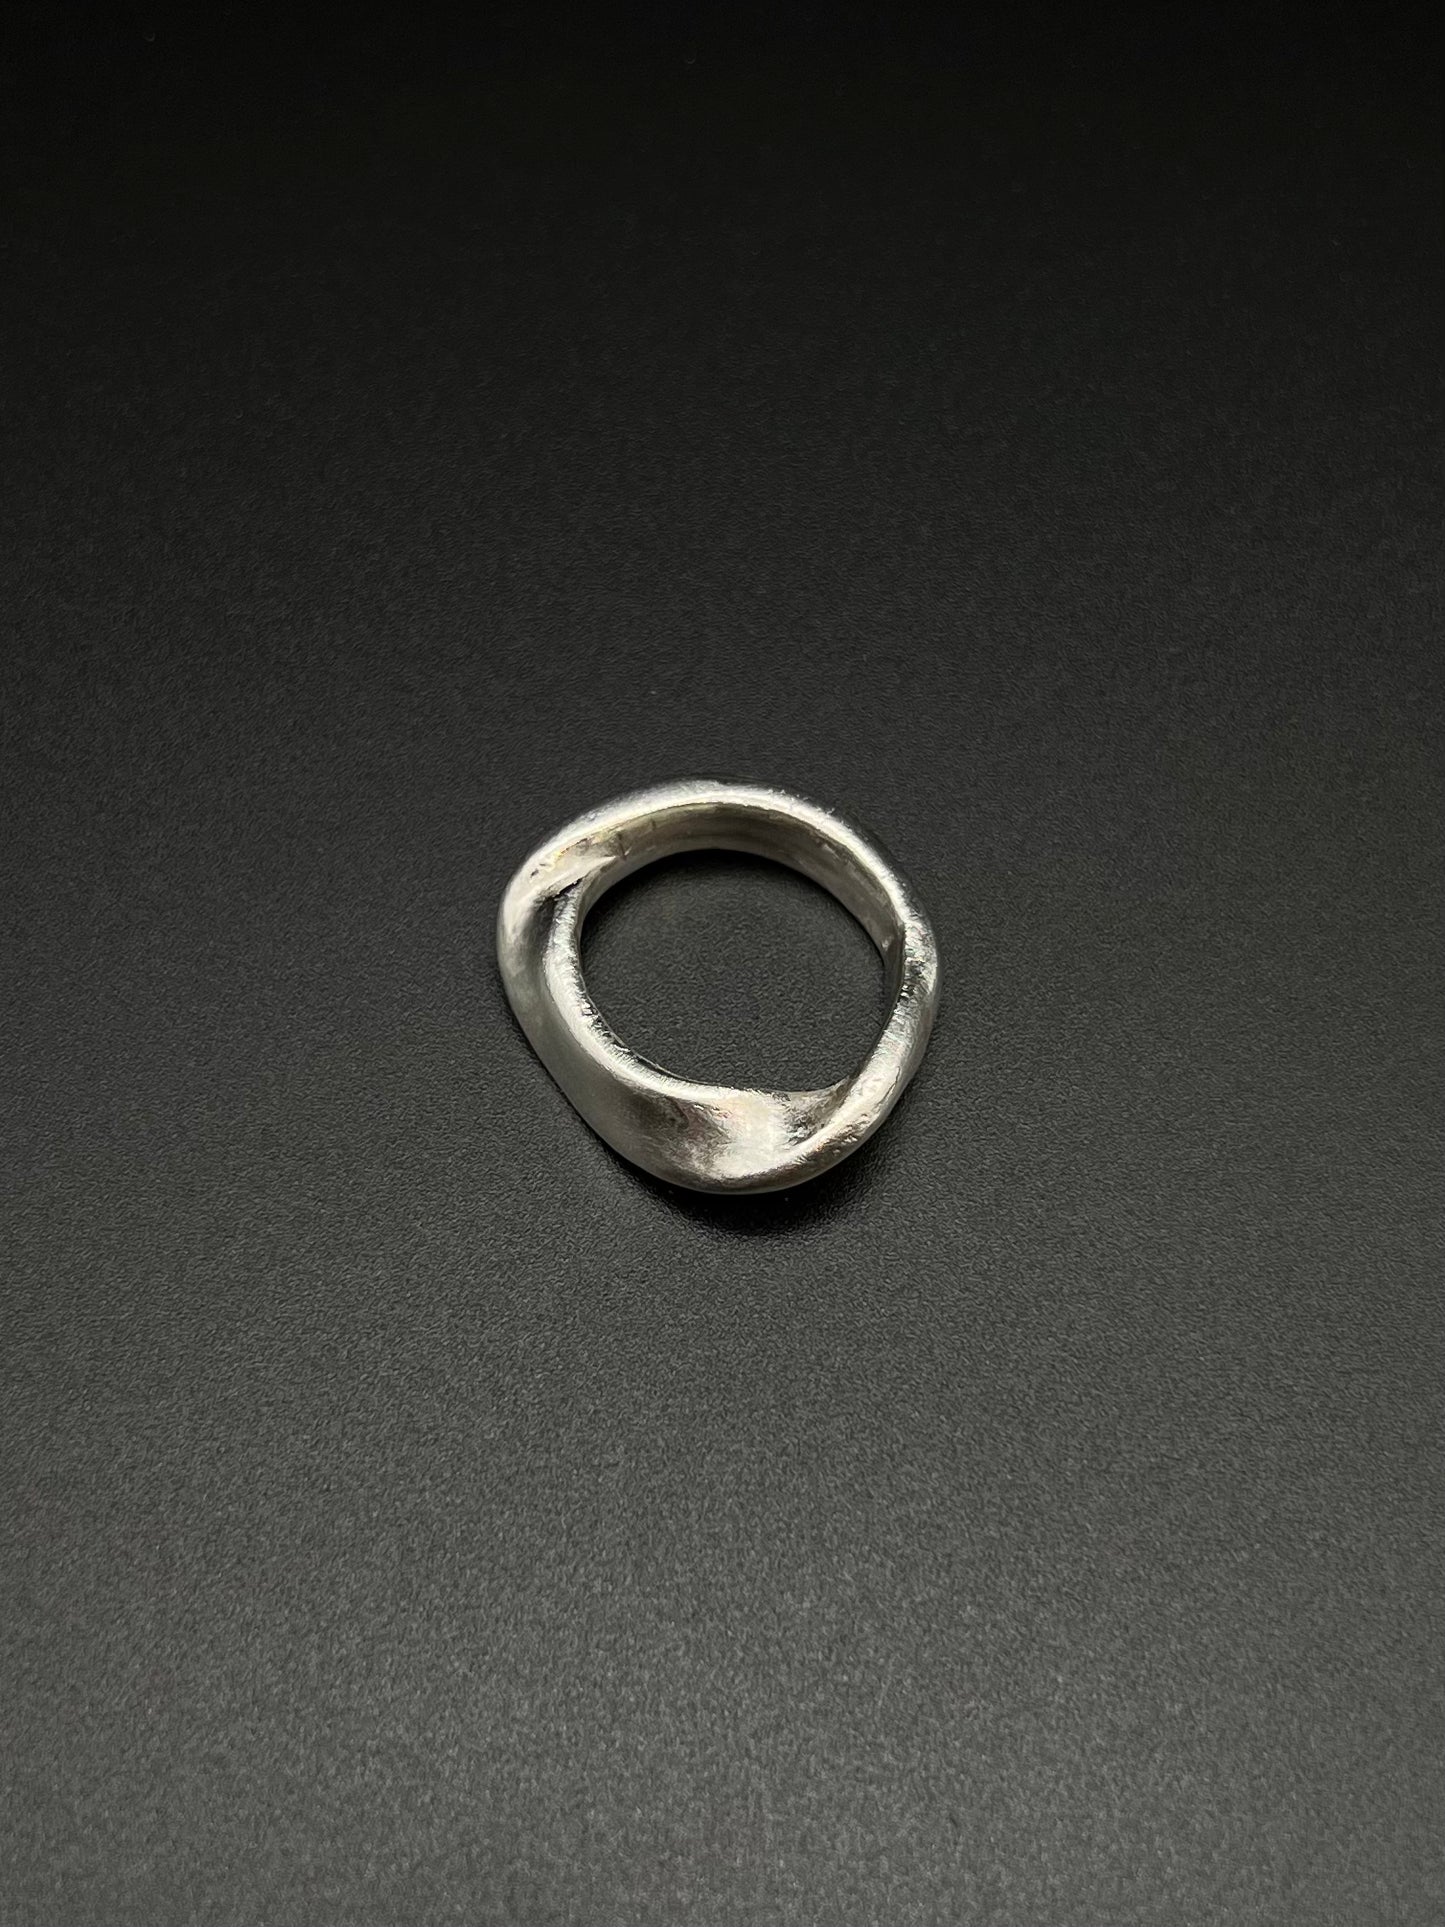 Silver original twist ring - A